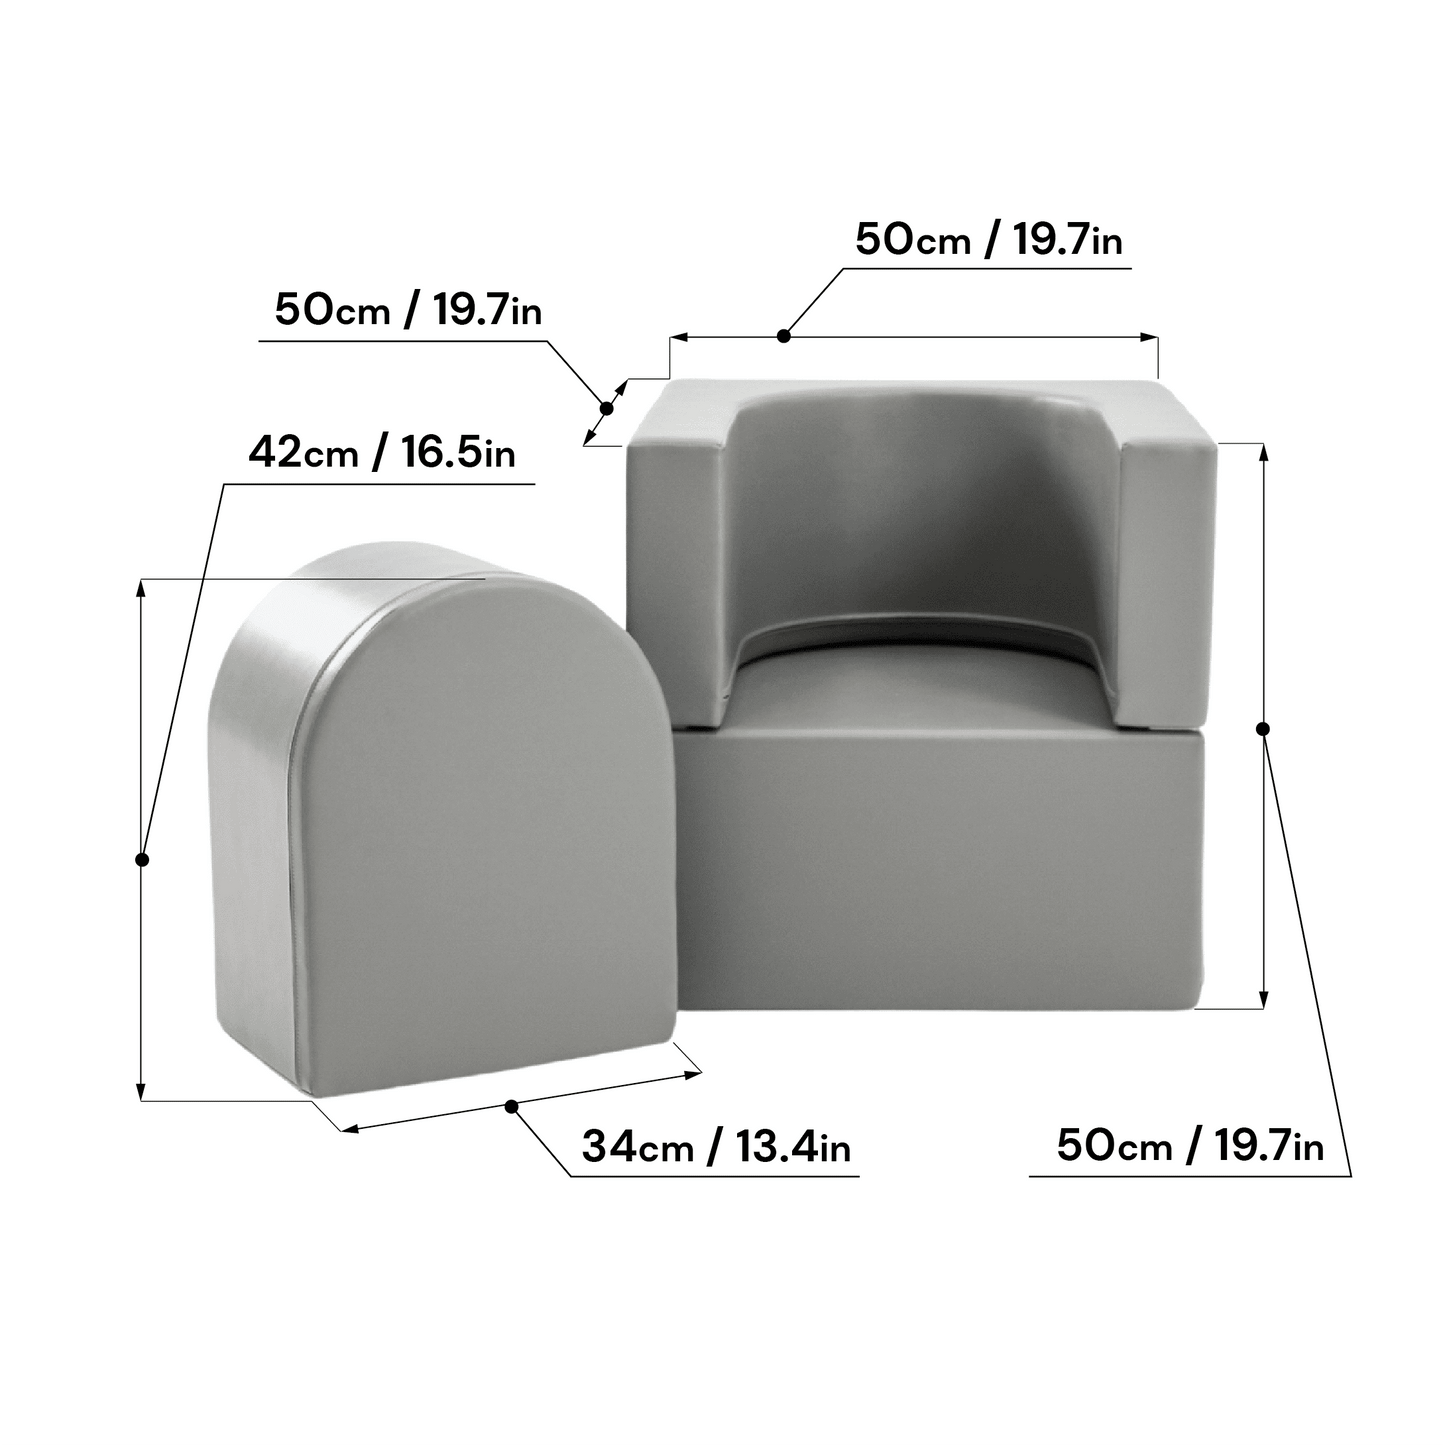 Soft Play Sofa Chair - Snoozy